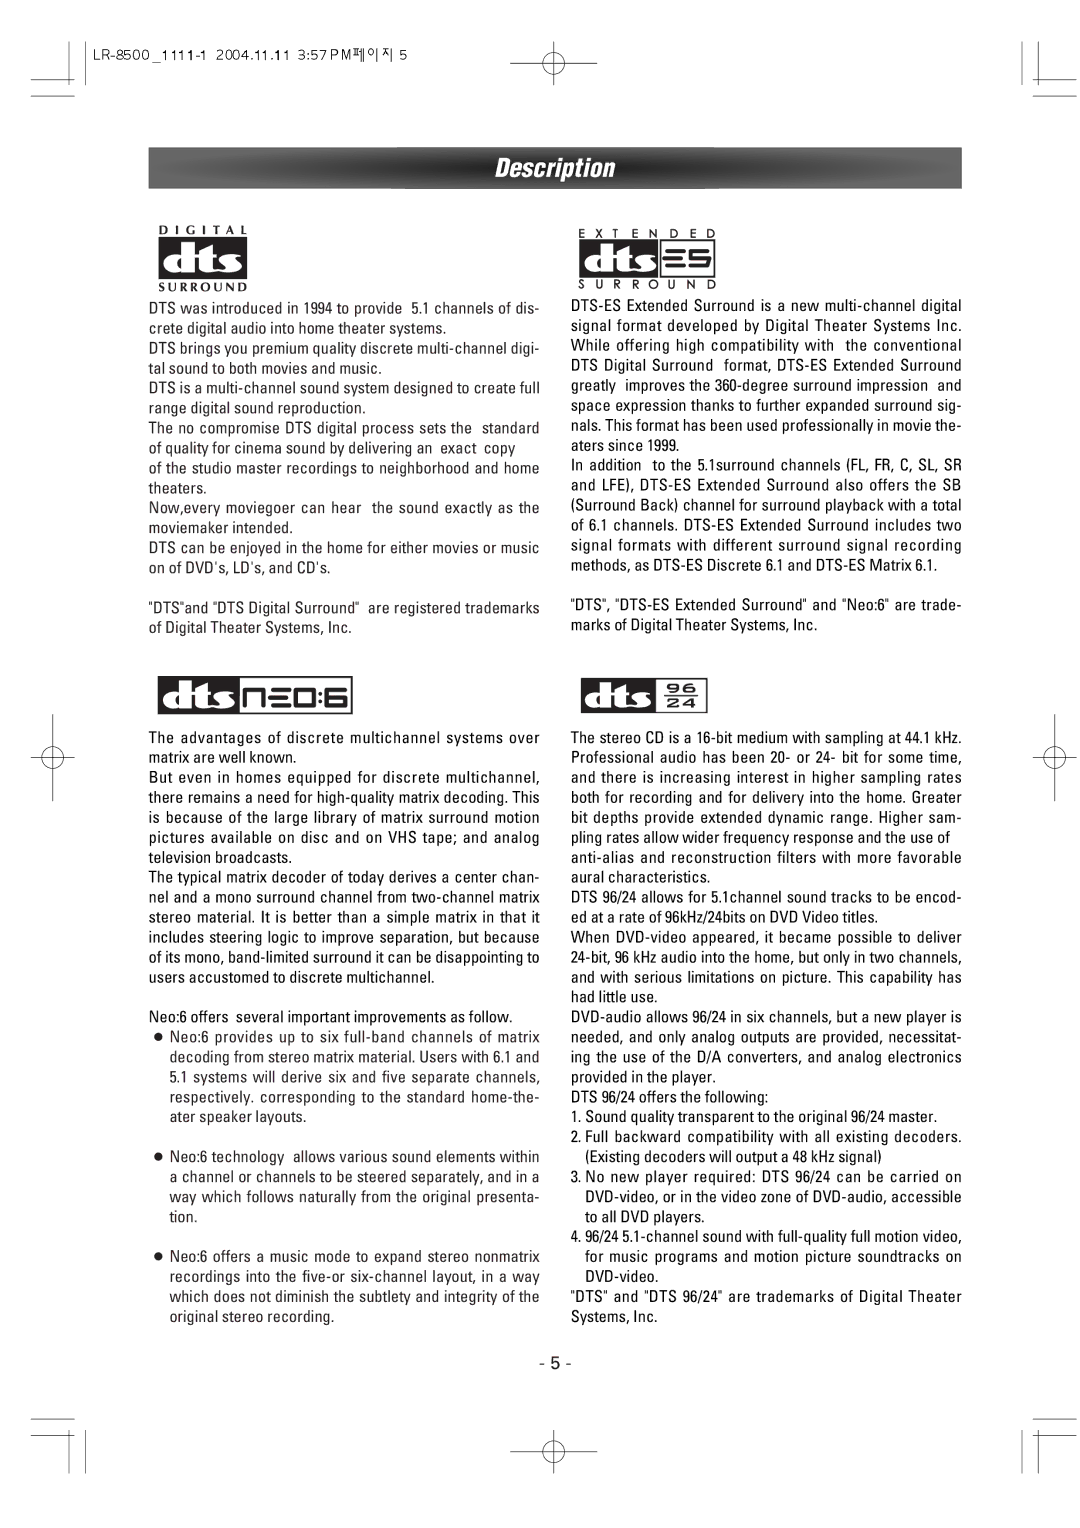 Dantax LR-8500 manual Description, Neo6 offers several important improvements as follow 